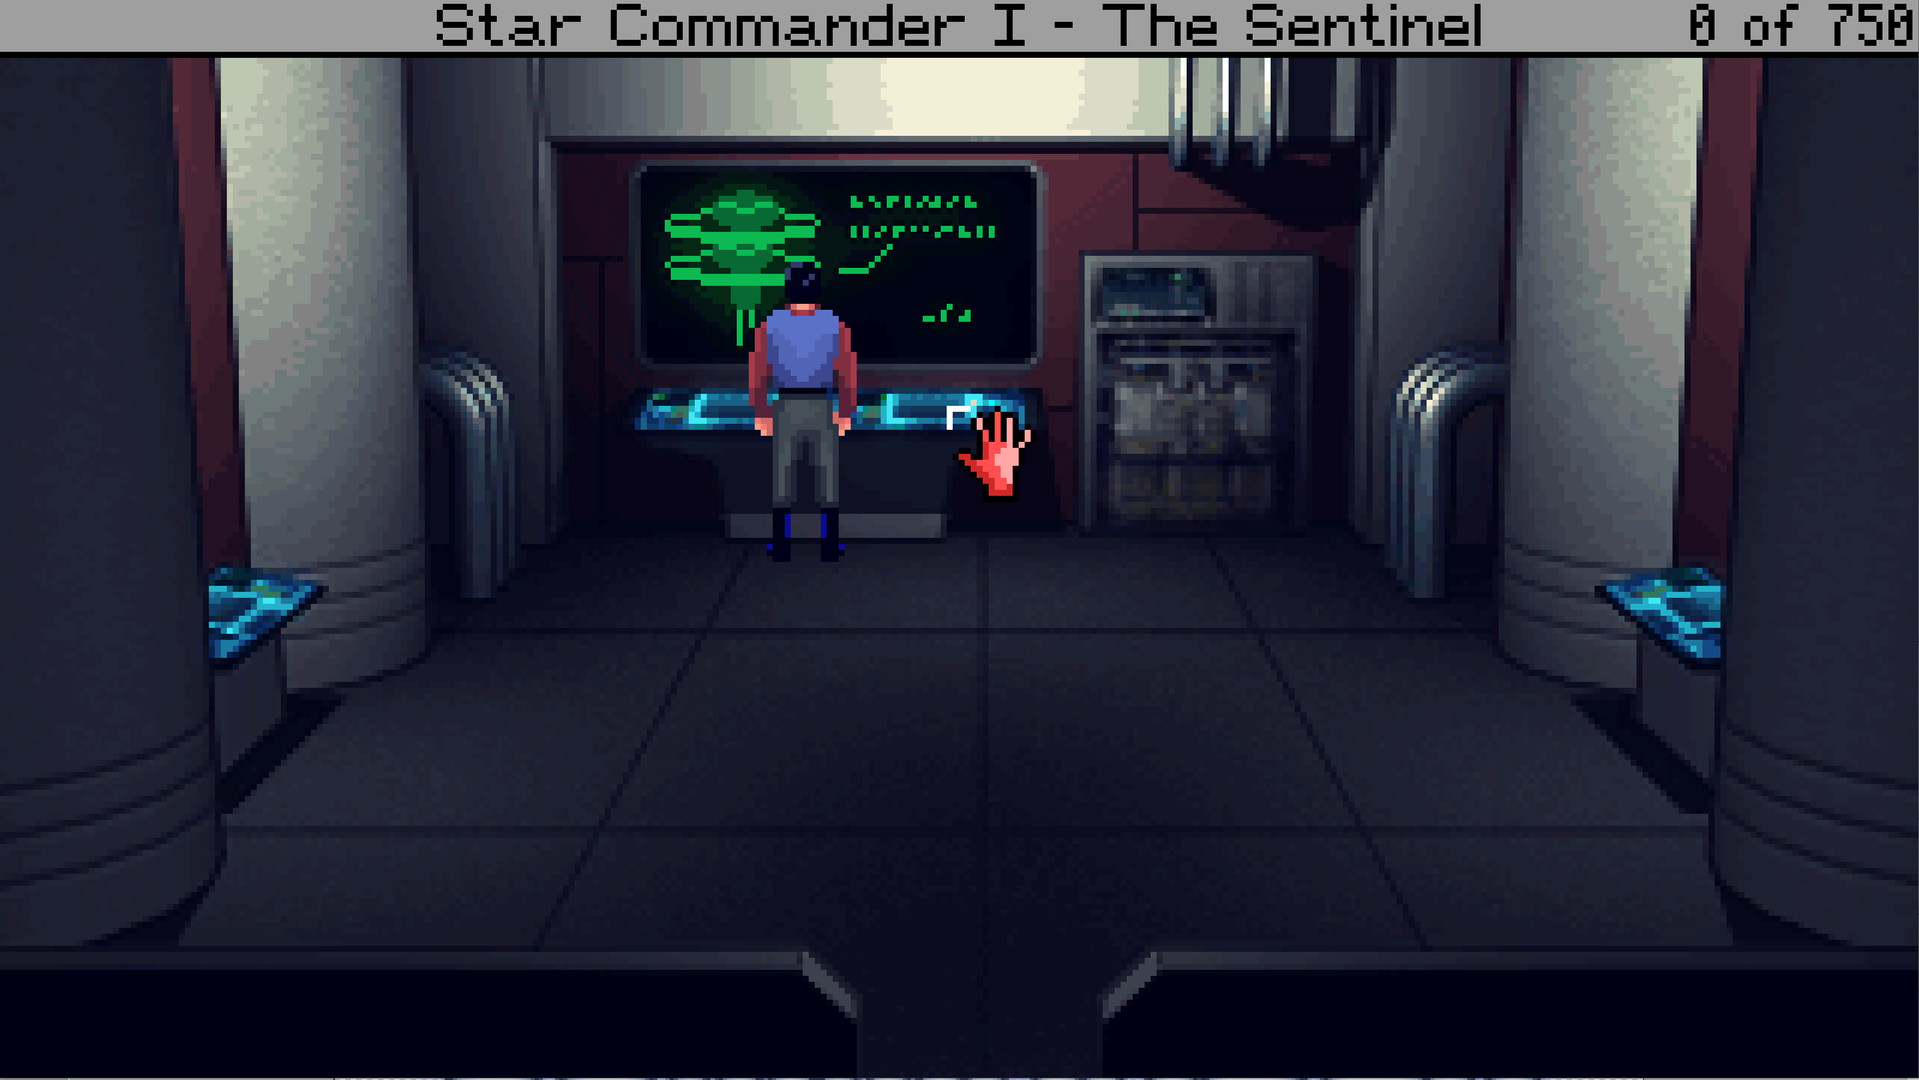 Star Commander - The Sentinel Featured Screenshot #1